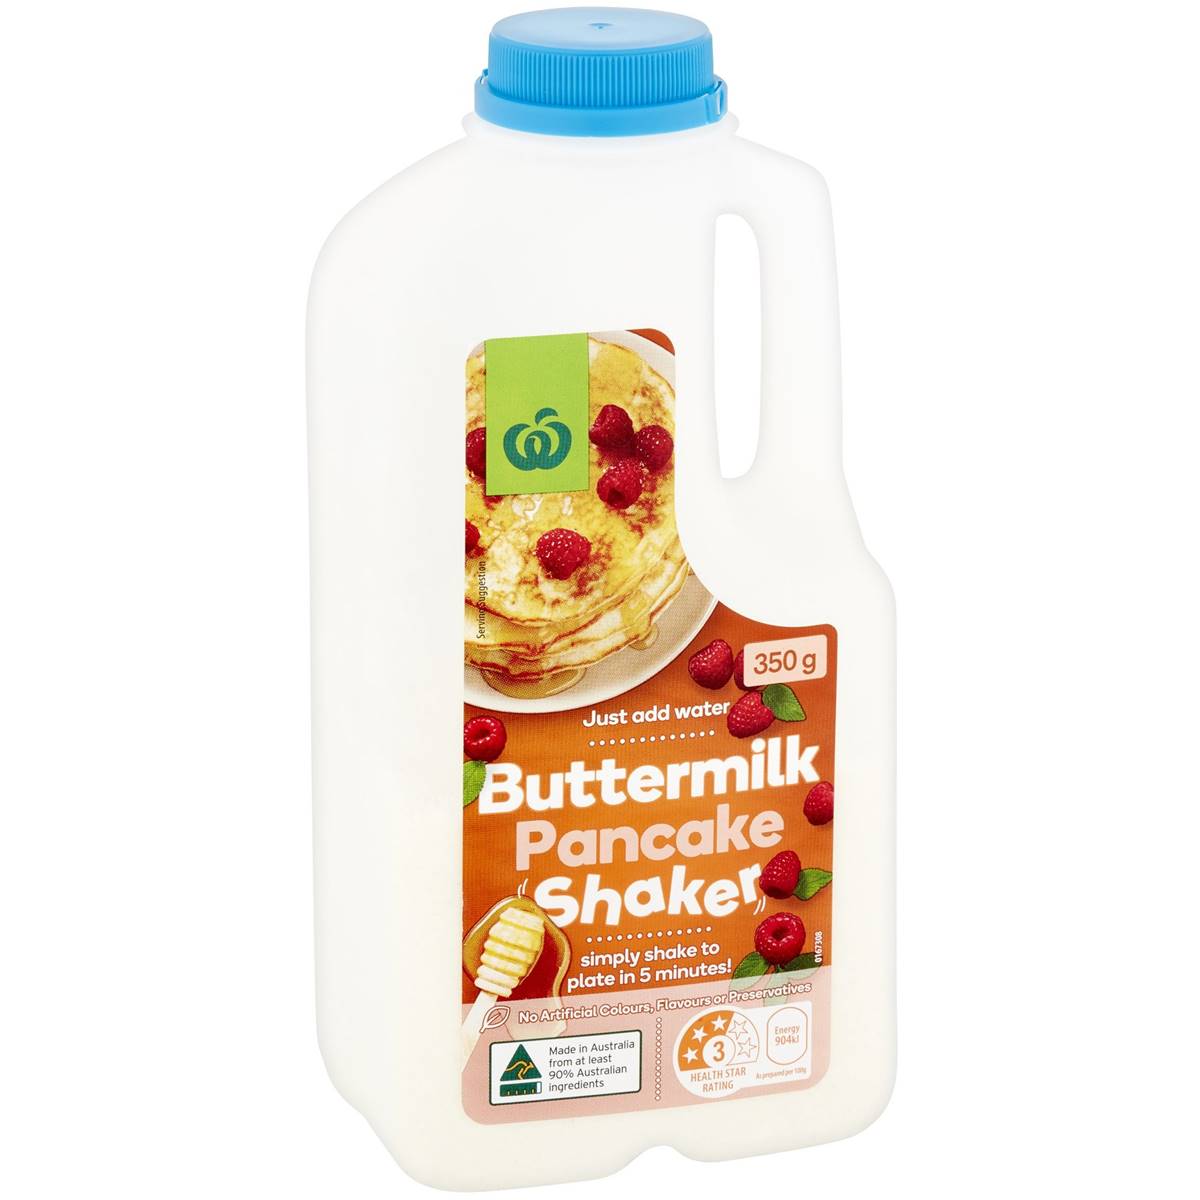 Calories in Woolworths Buttermilk Pancake Shaker